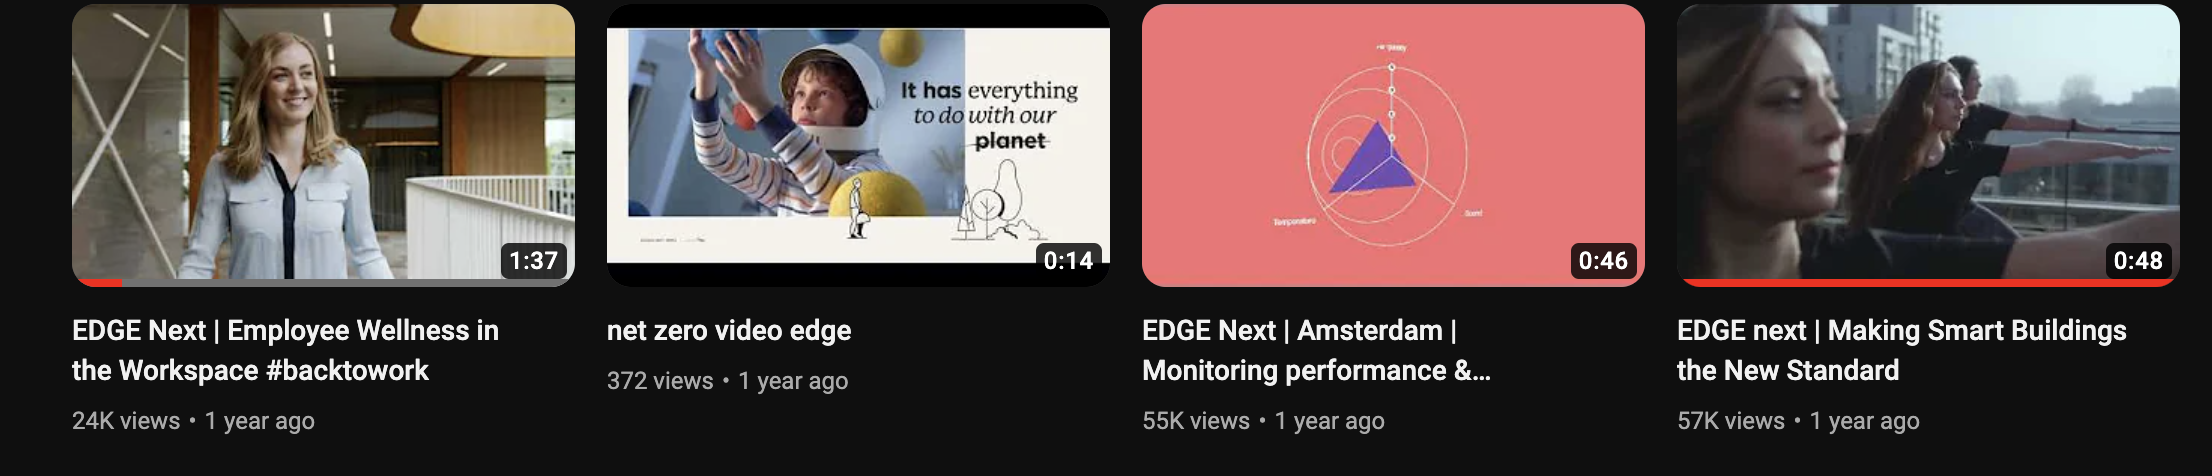 Video Content EDGE Next